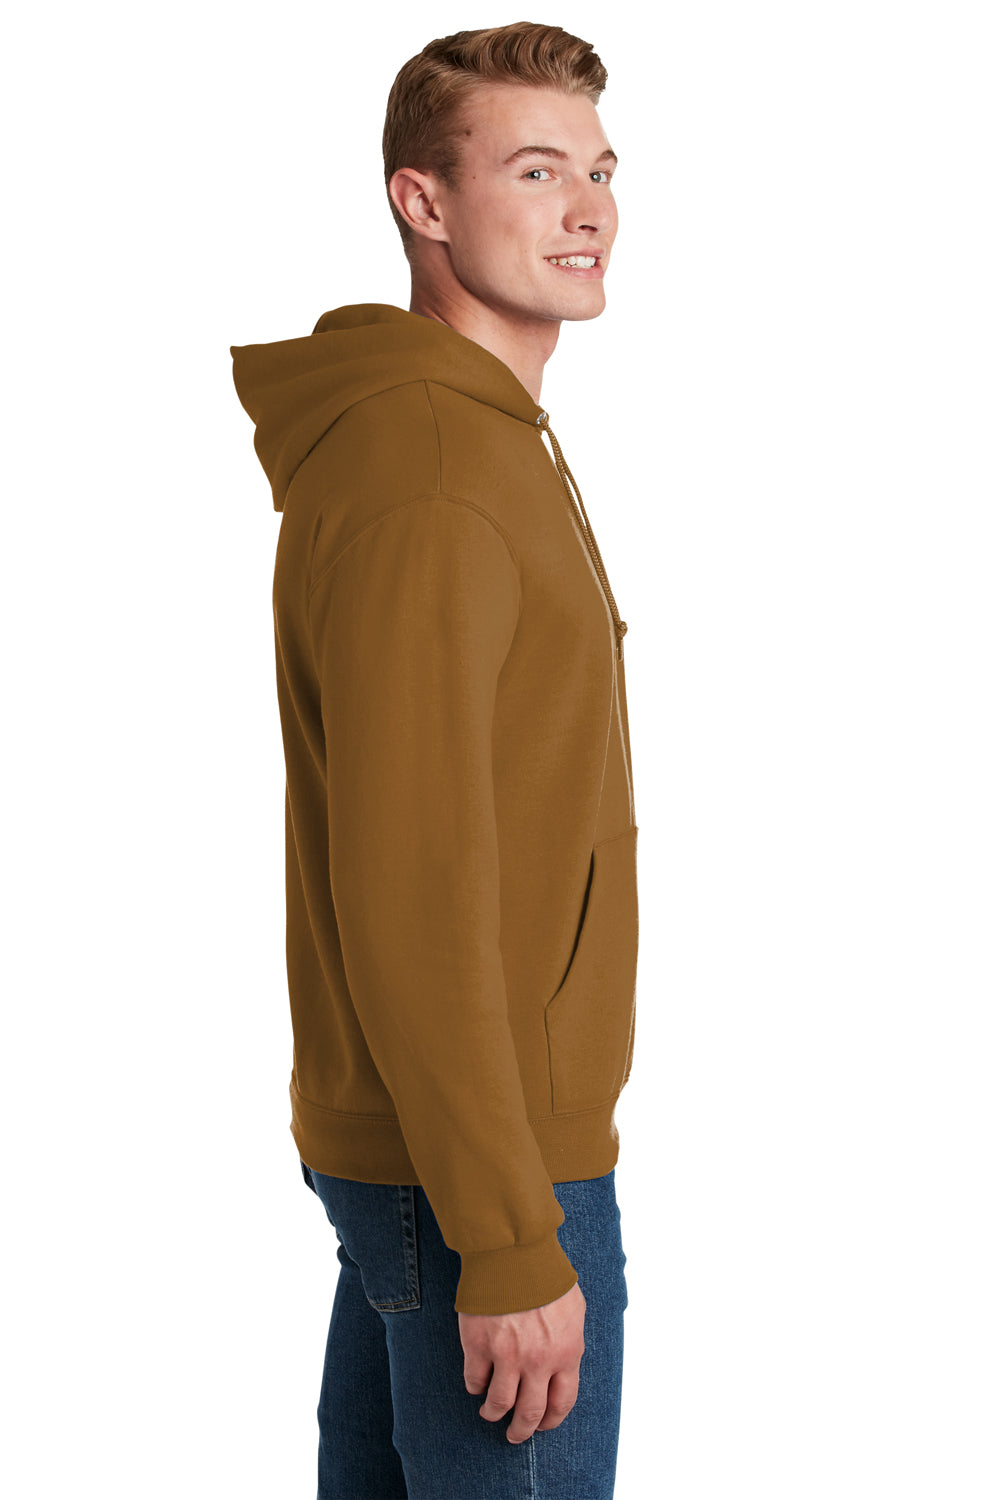 Jerzees 996M/996/996MR Mens NuBlend Fleece Hooded Sweatshirt Hoodie Golden Pecan Brown Side